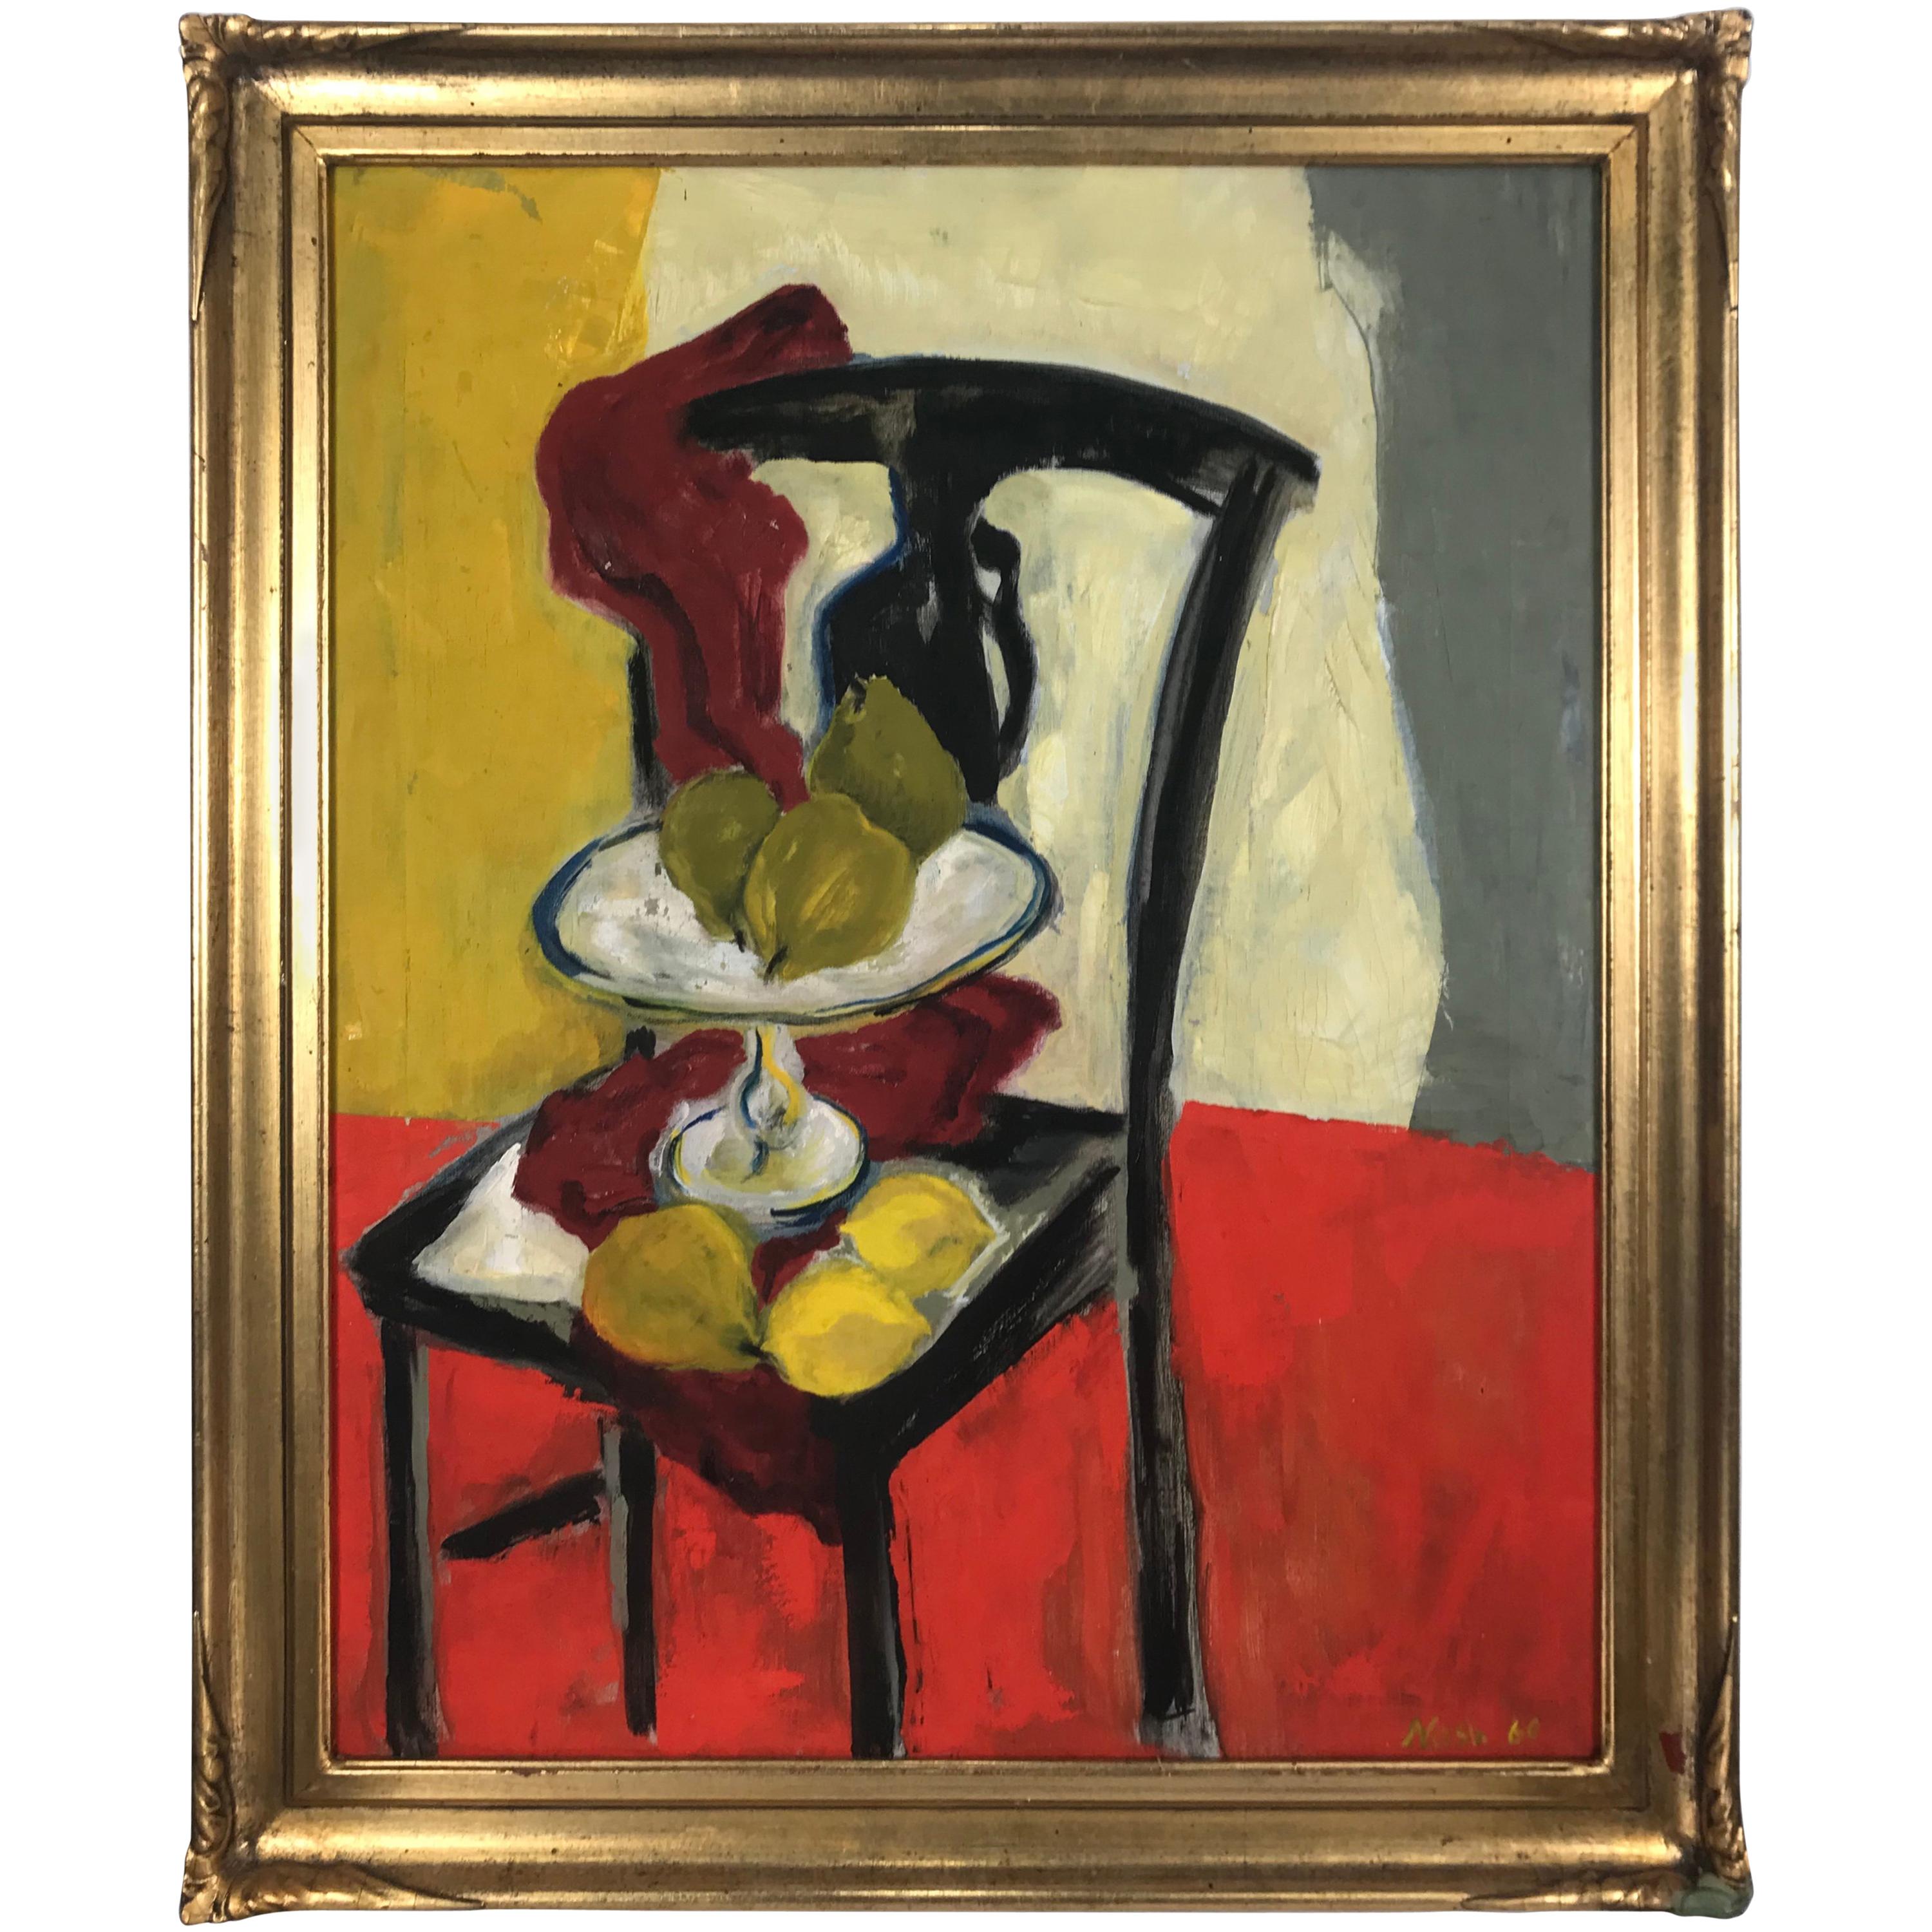 Modernest Oil on Canvas "Fruit on Chair" Signed Nash, 1960